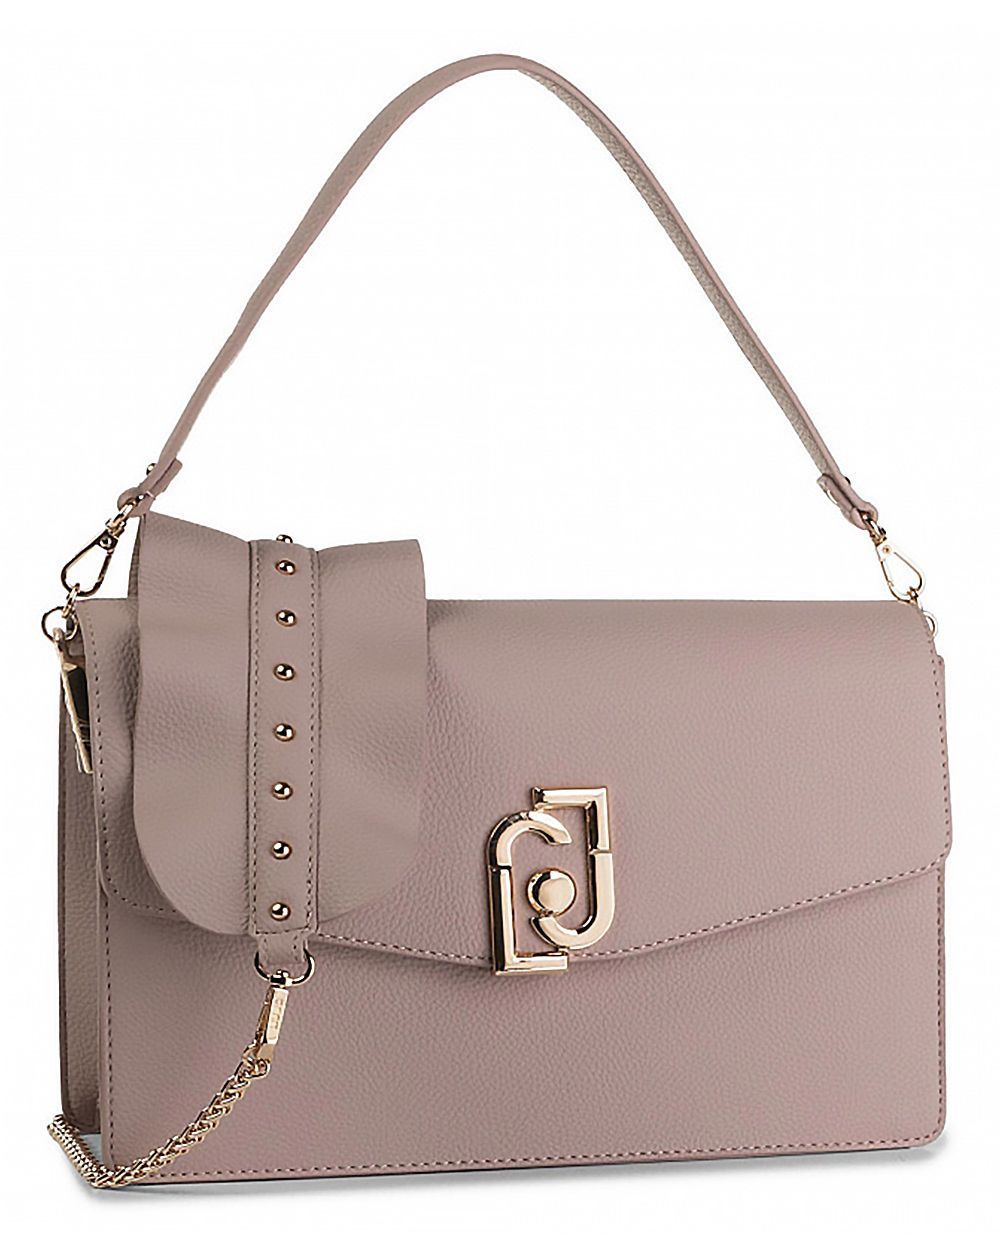 Liu Jo Milano Pink Shoulder Bag with Chain Strap | Buy Shoulder bags ...